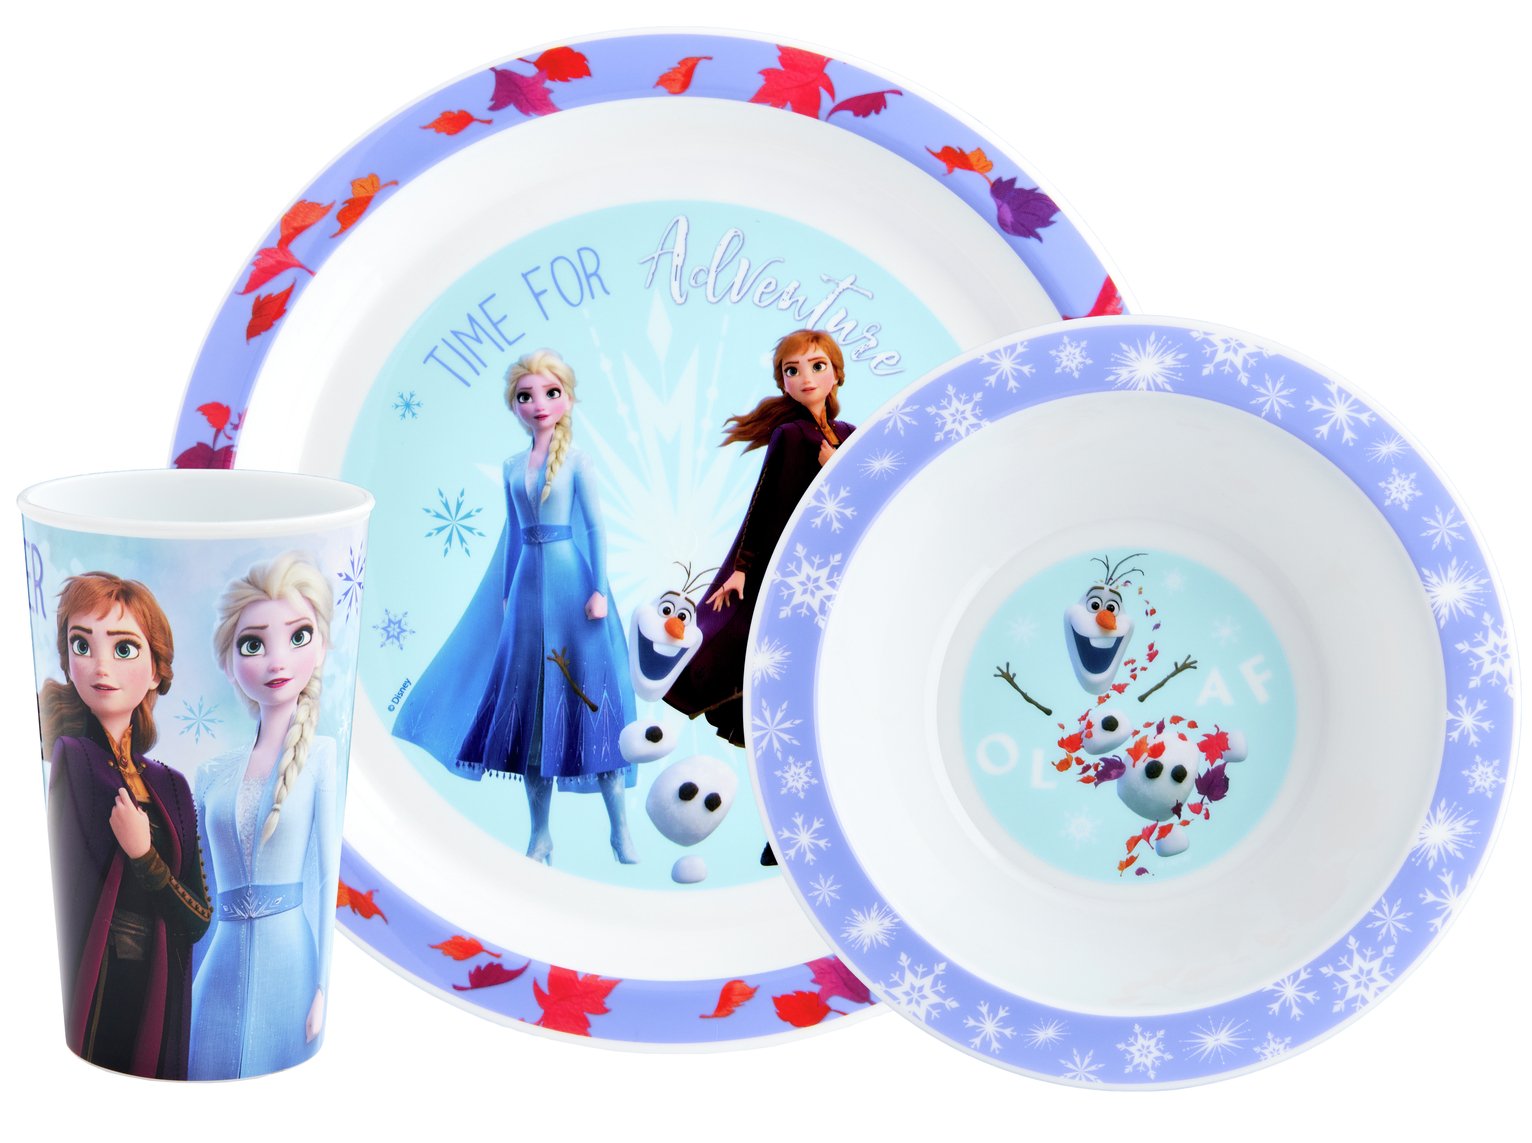 Disney Frozen Polypropylene Dinner Set - Purple